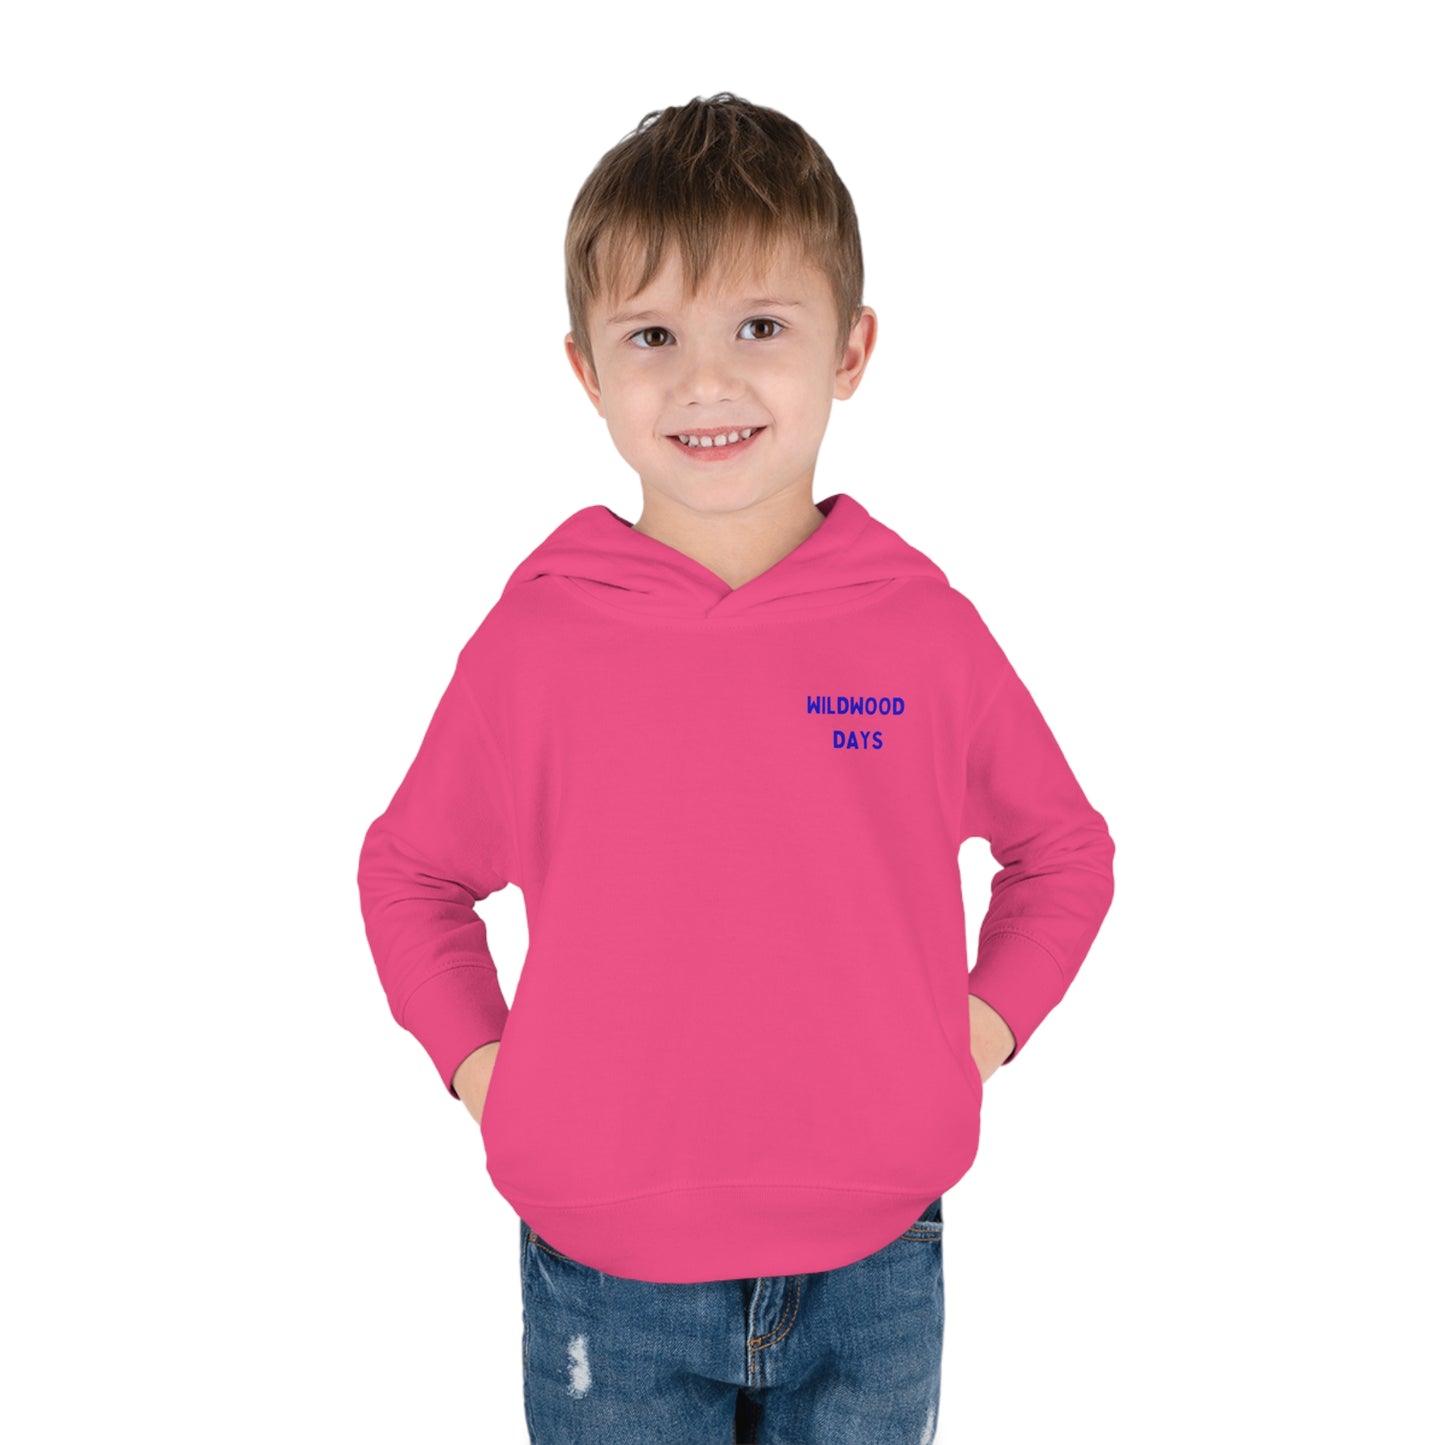 Wildwood, Toddler Wildwood Days, Wildwood Graphic Sweatshirt, Toddler Pullover Fleece Hoodie, Free Shipping